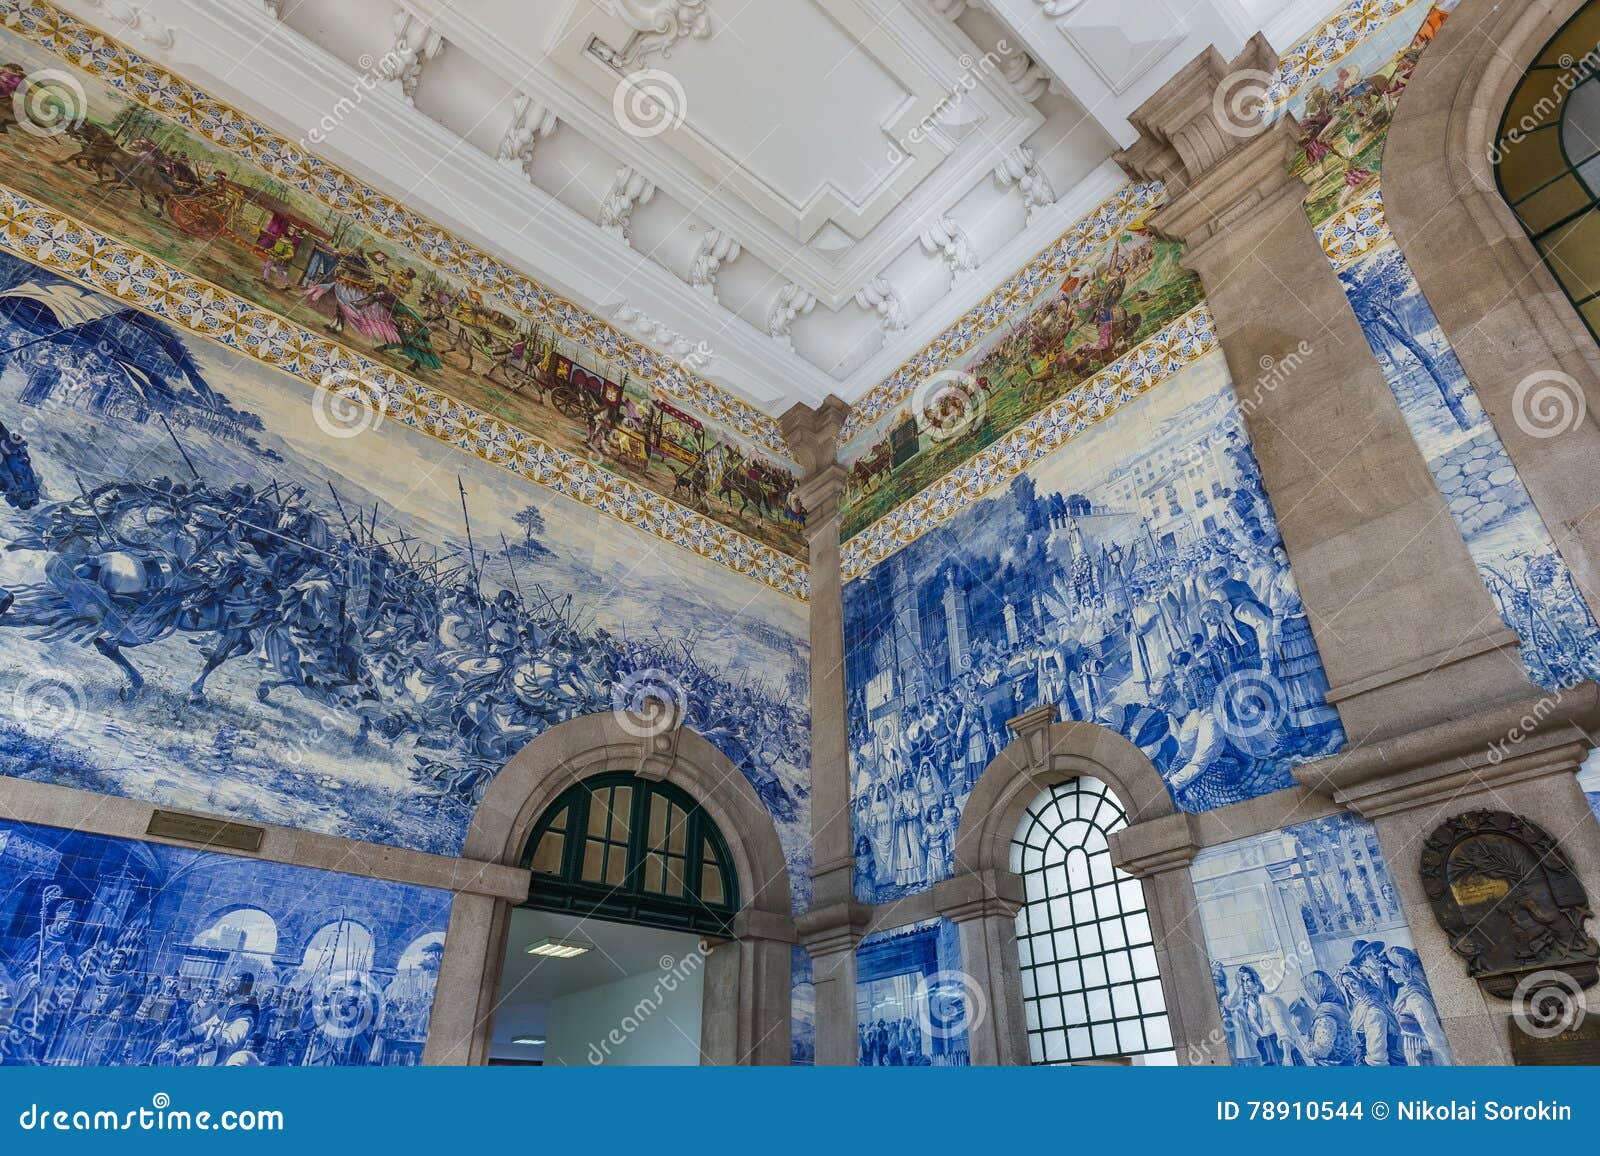 ceramic azulejos in porto train station - portugal